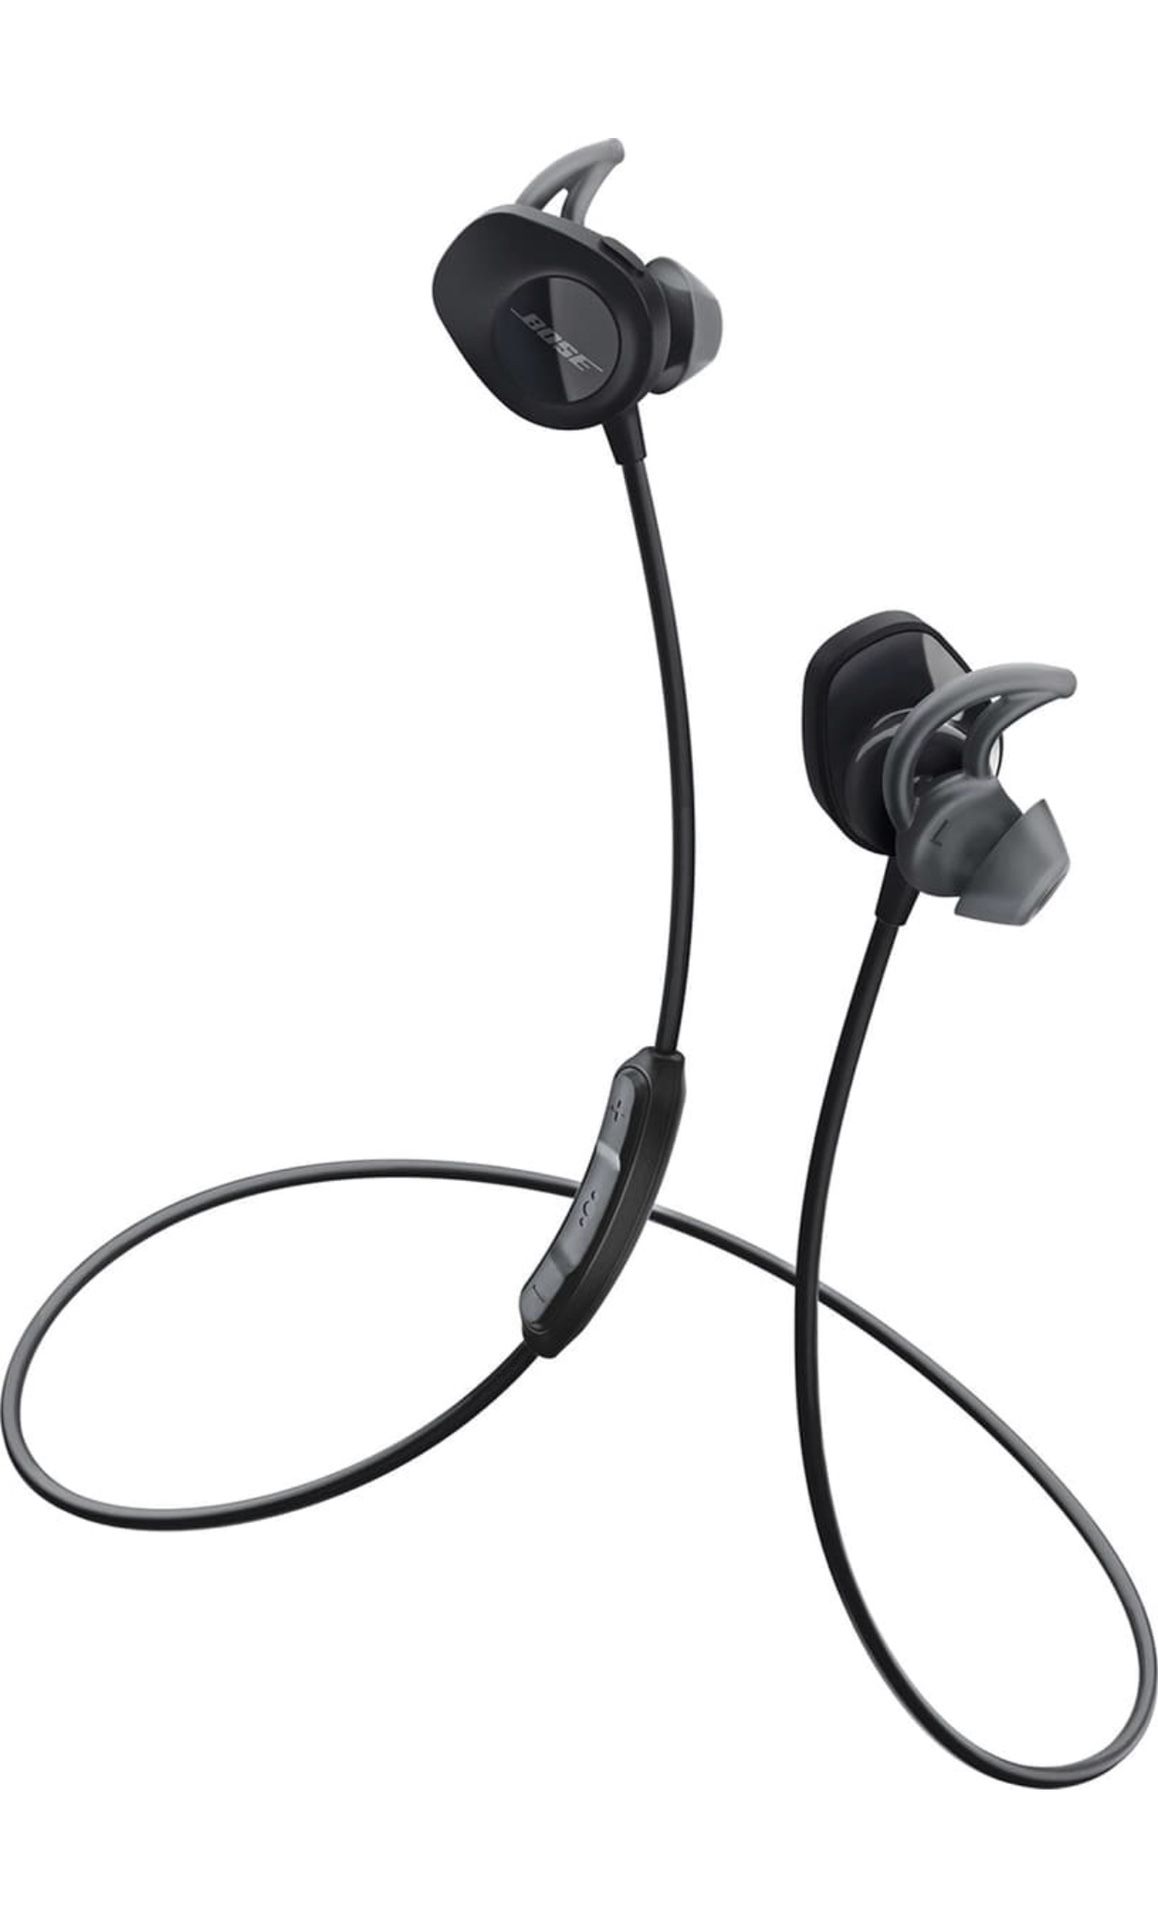 Bose SoundSport Wireless Earbuds